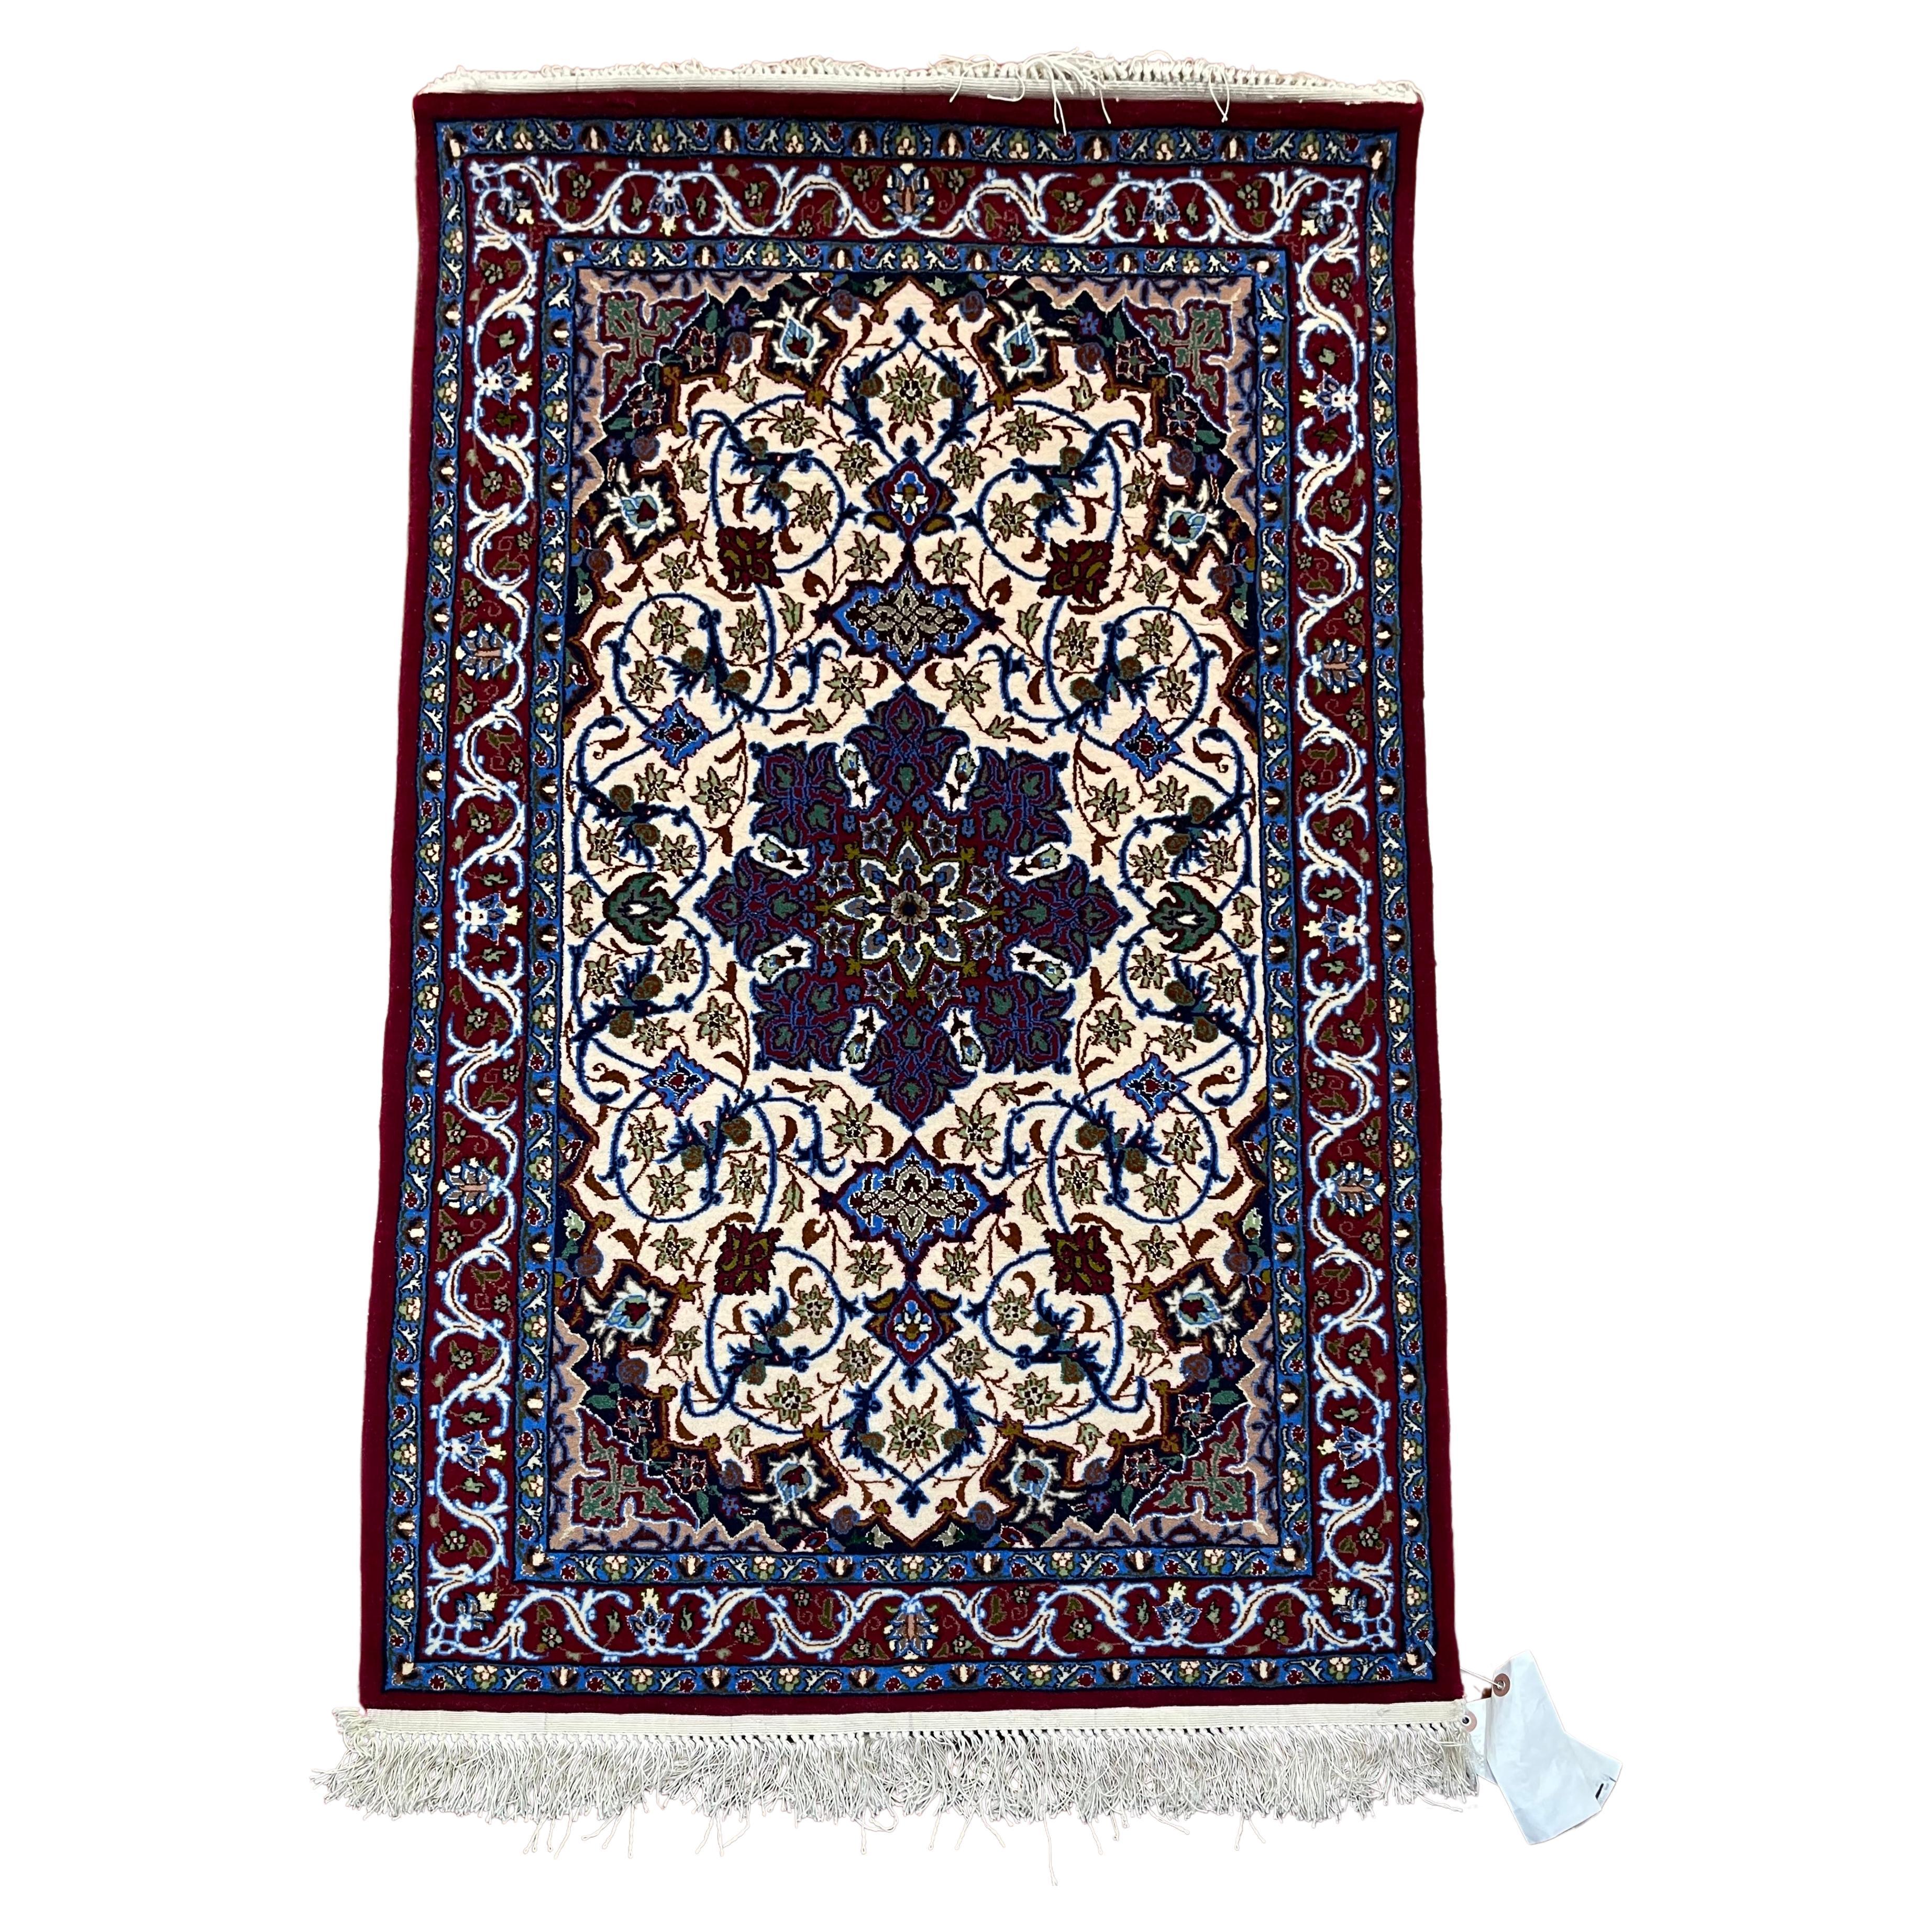 Très beau tapis persan d'Ispahan